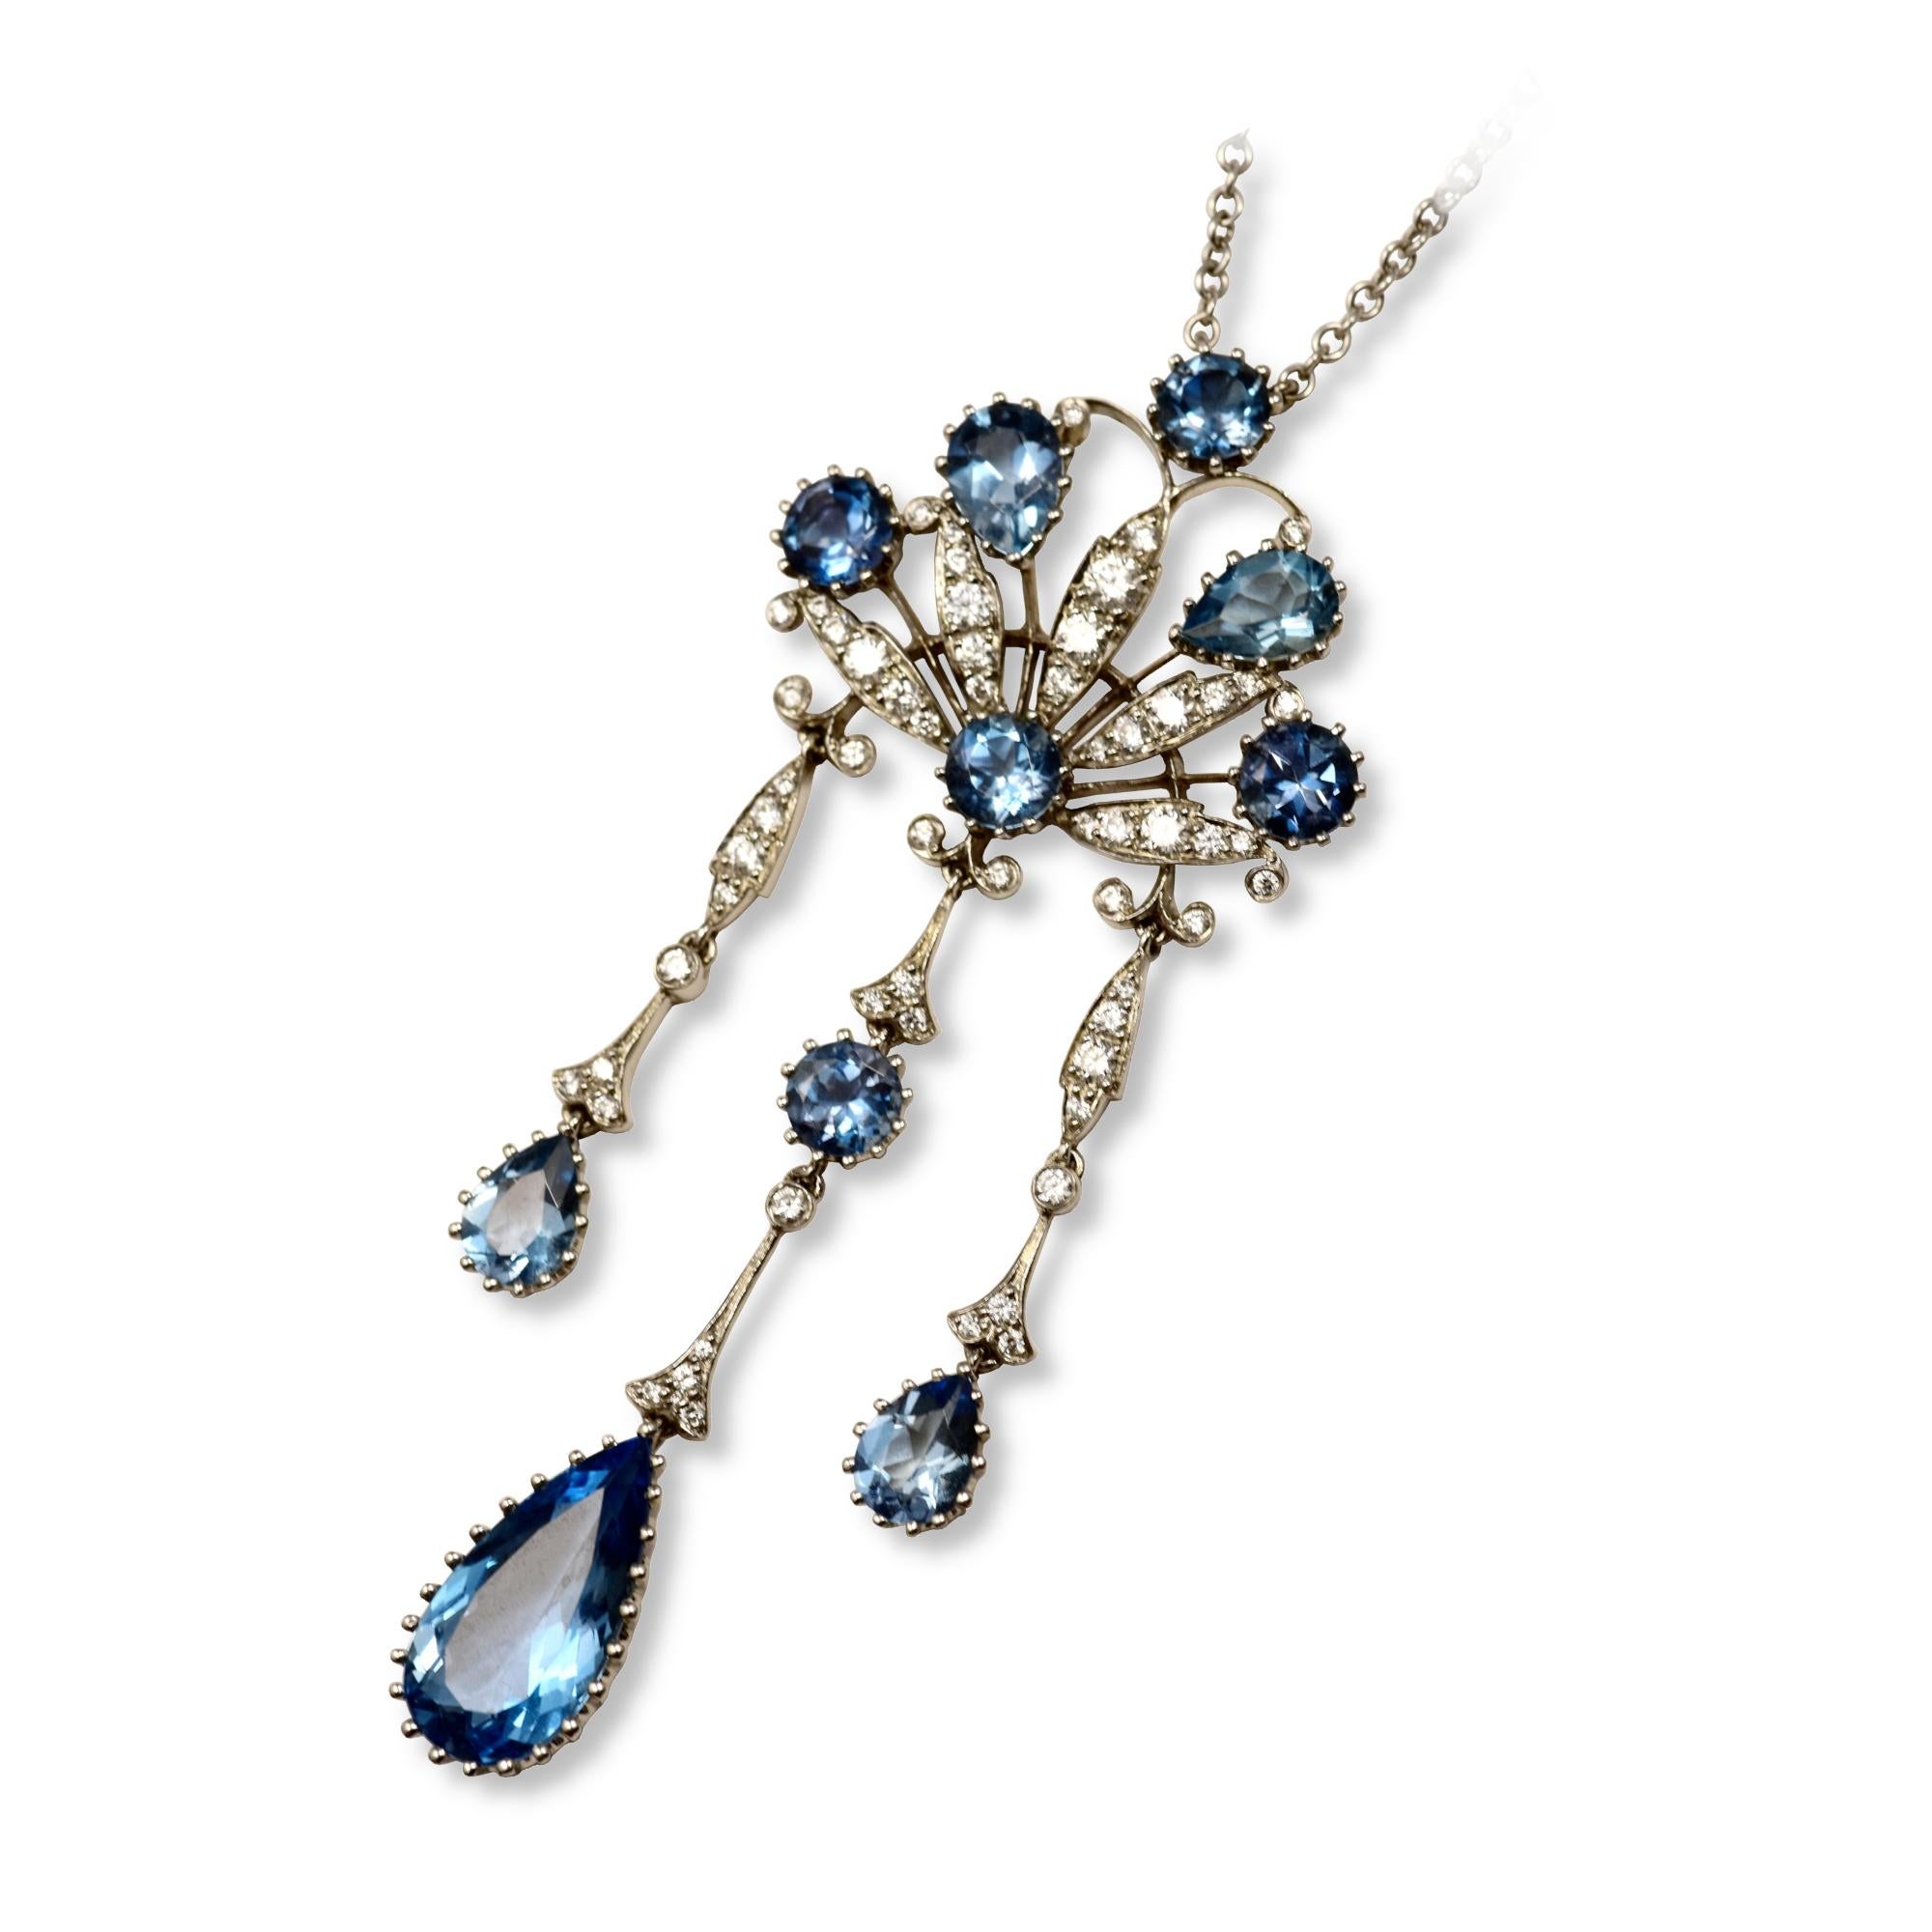 Brand: Tiffany & Co.

Style: Pendant Necklace 

Metal: Platinum  

Metal Purity: 950

Stone: Round Brilliant Cut Diamonds

               Round & Pear Shaped Aquamarine

Chain Length: 14.96